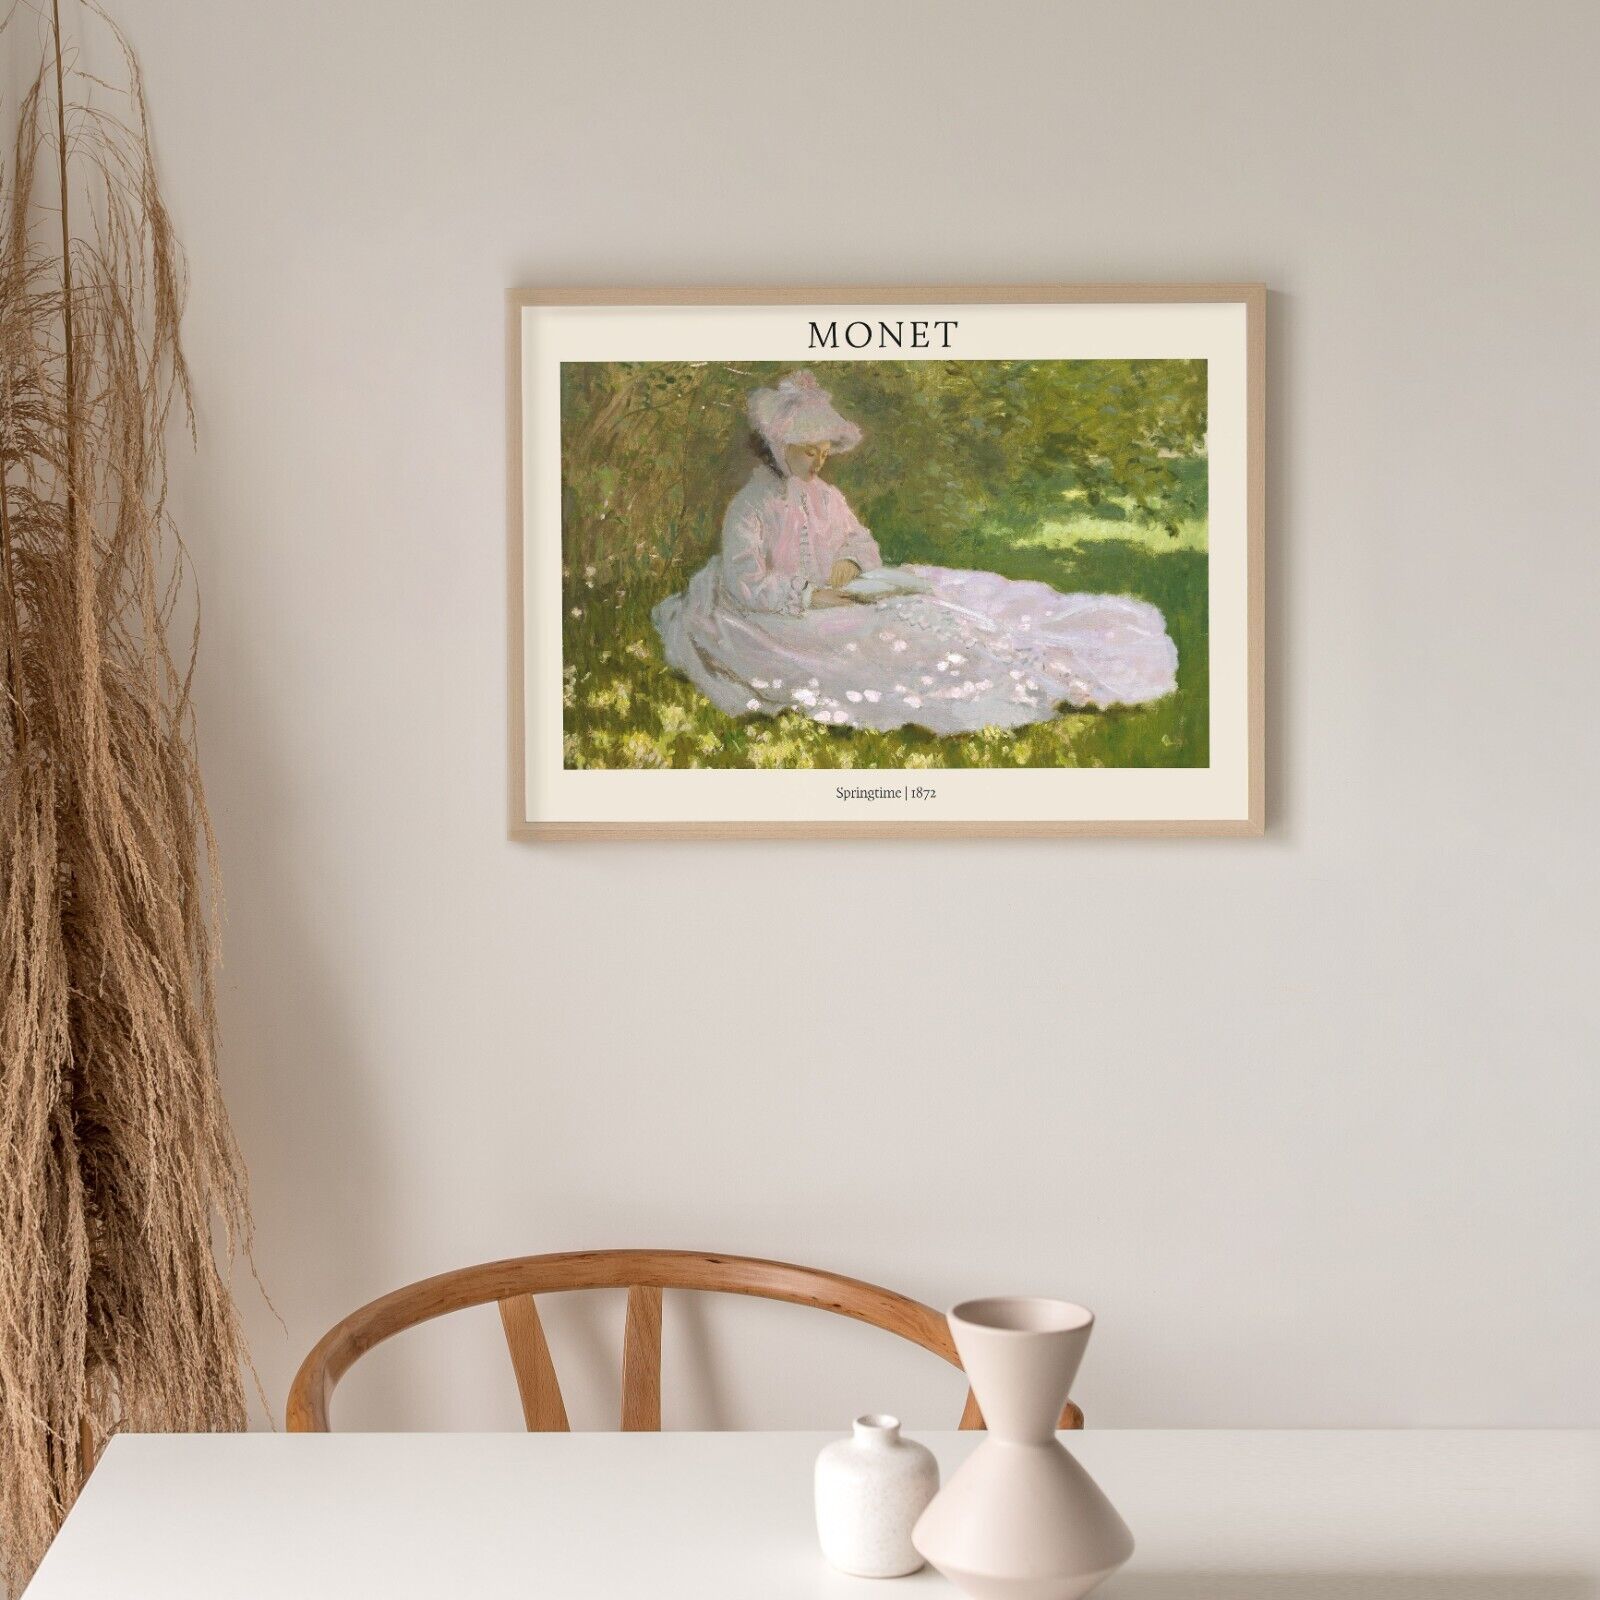 Claude Monet: Springtime - Art Poster - Retro Poster - Vintage Wall Art Prints